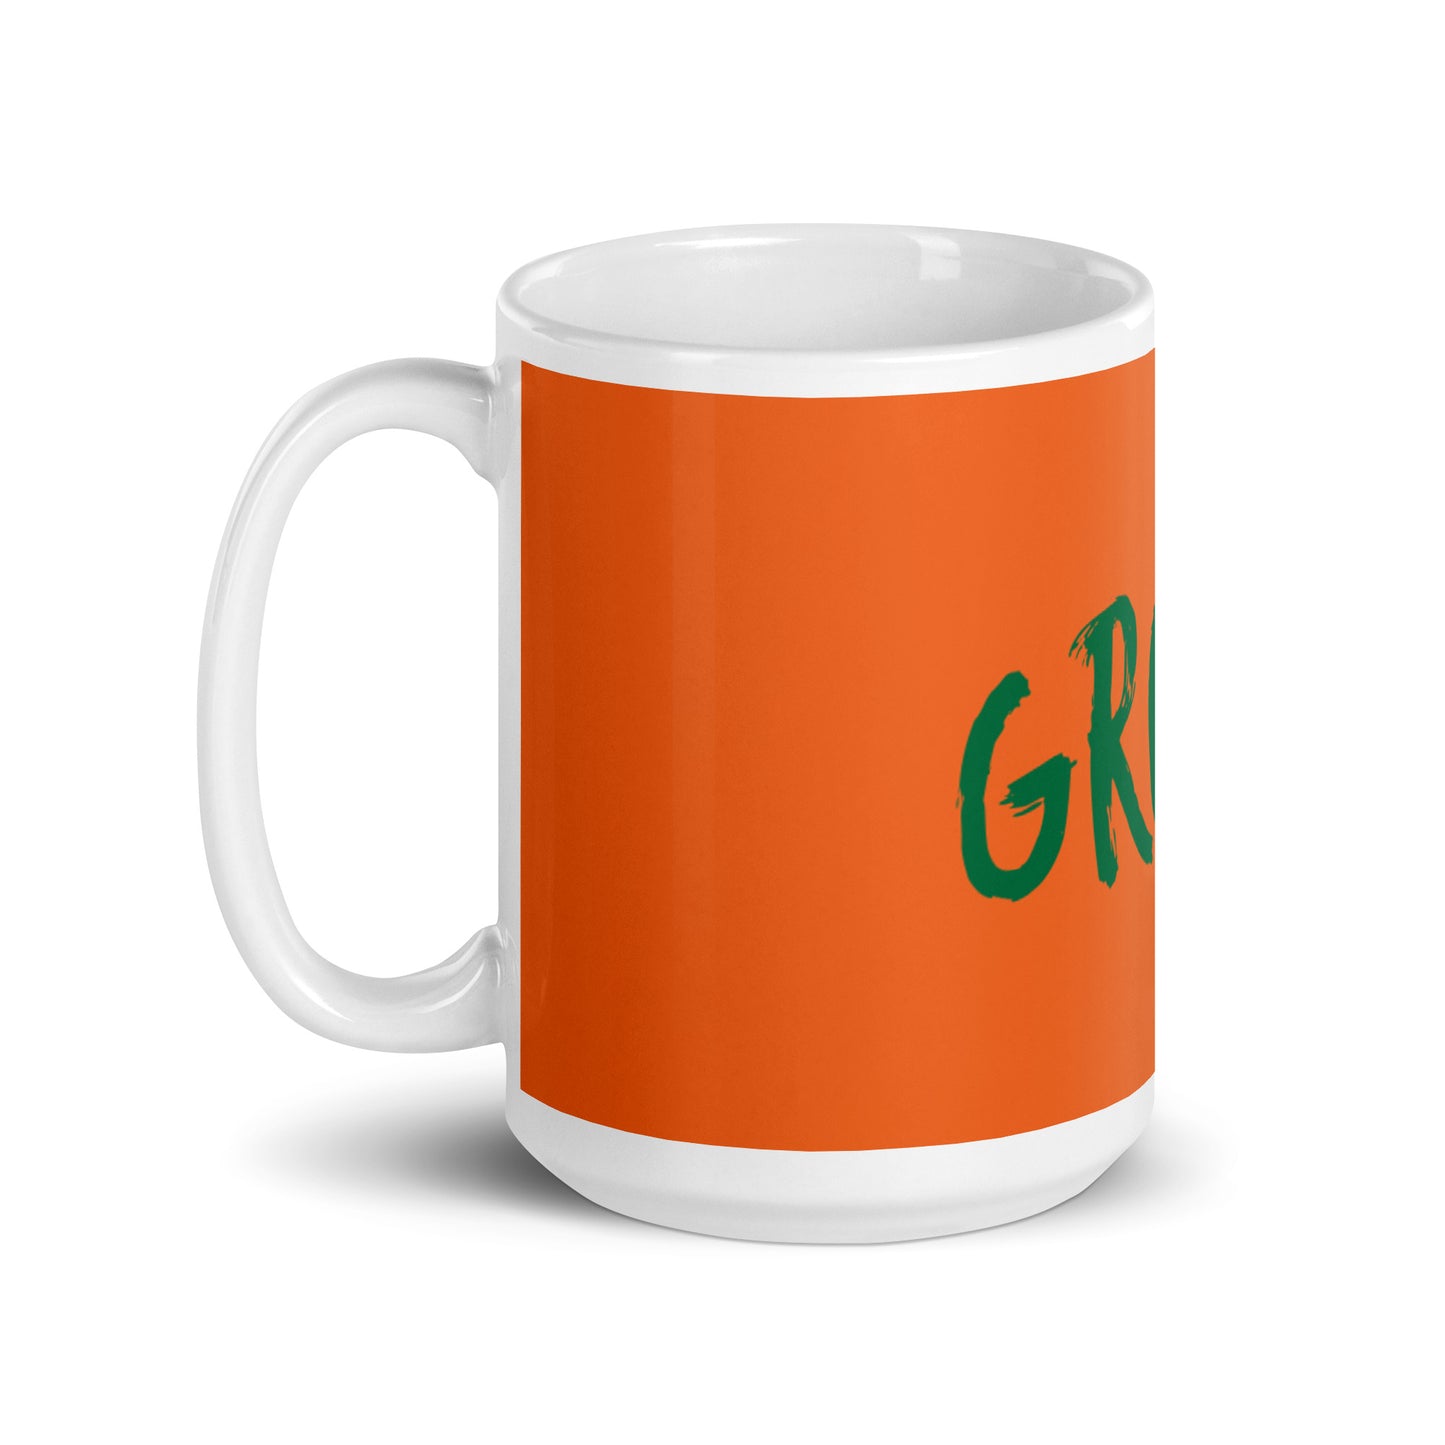 Orange White Glossy Mug - Groovy